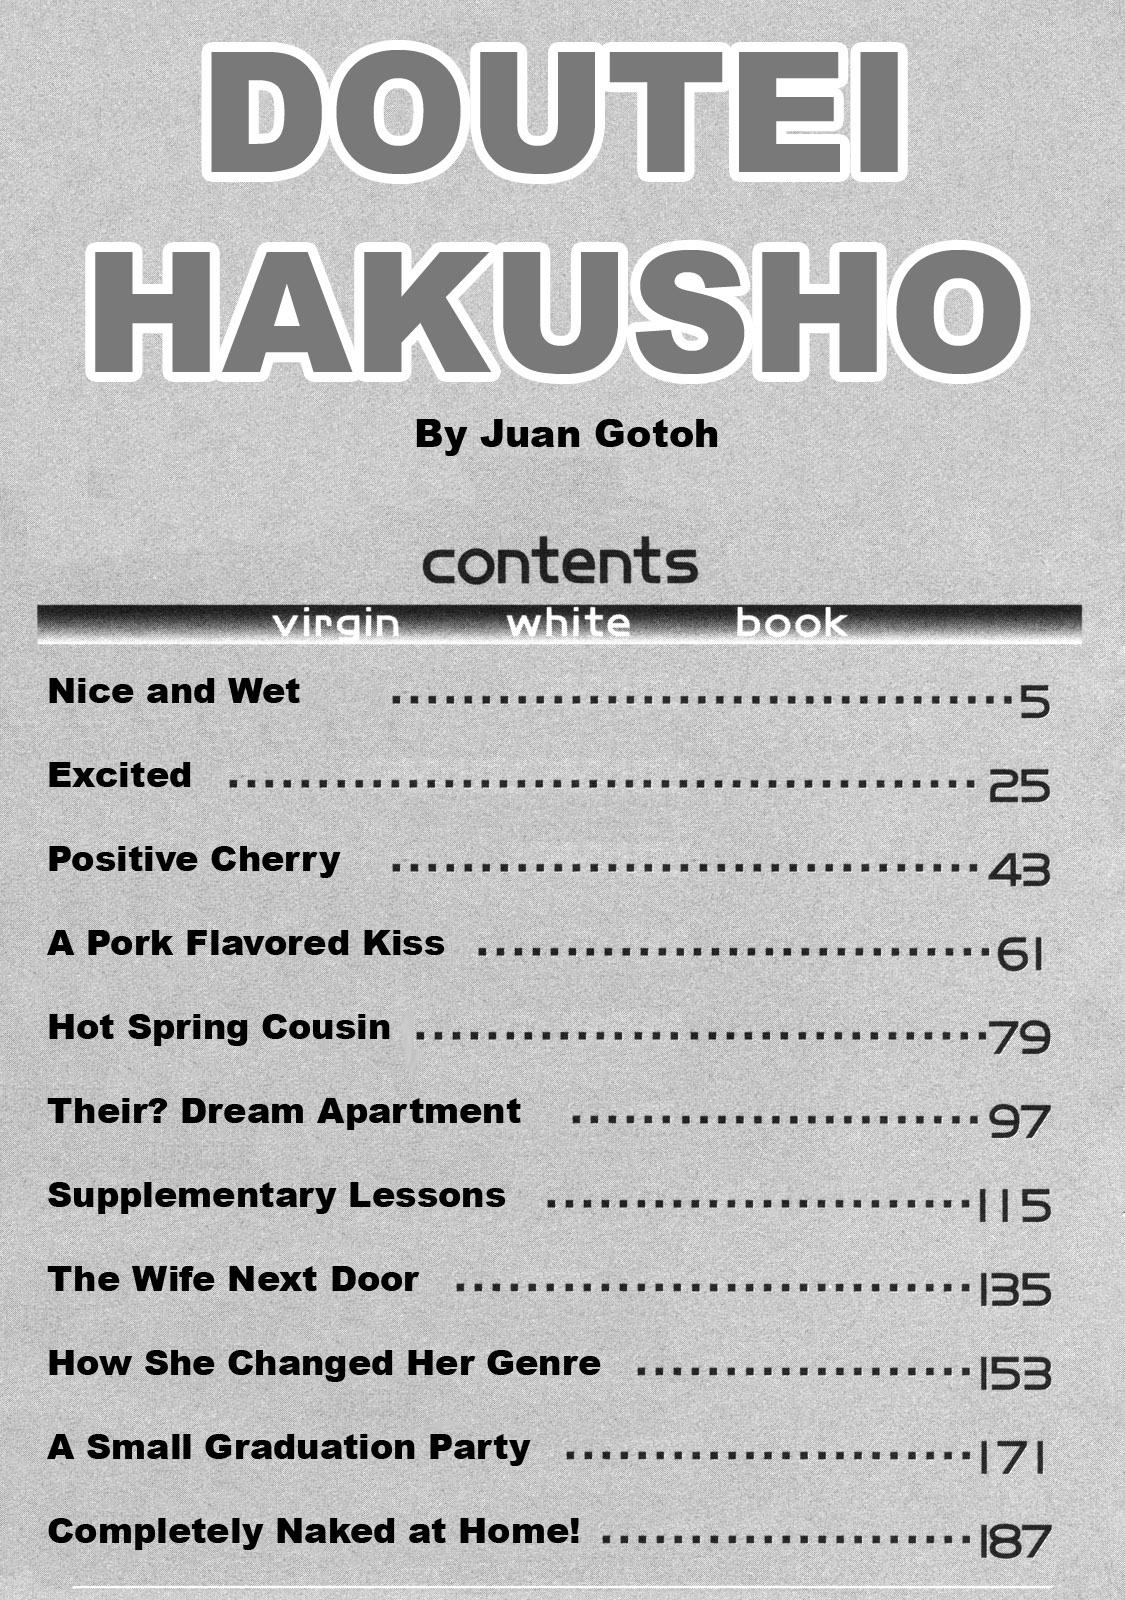 Doutei Hakusho - Virgin White Book 4